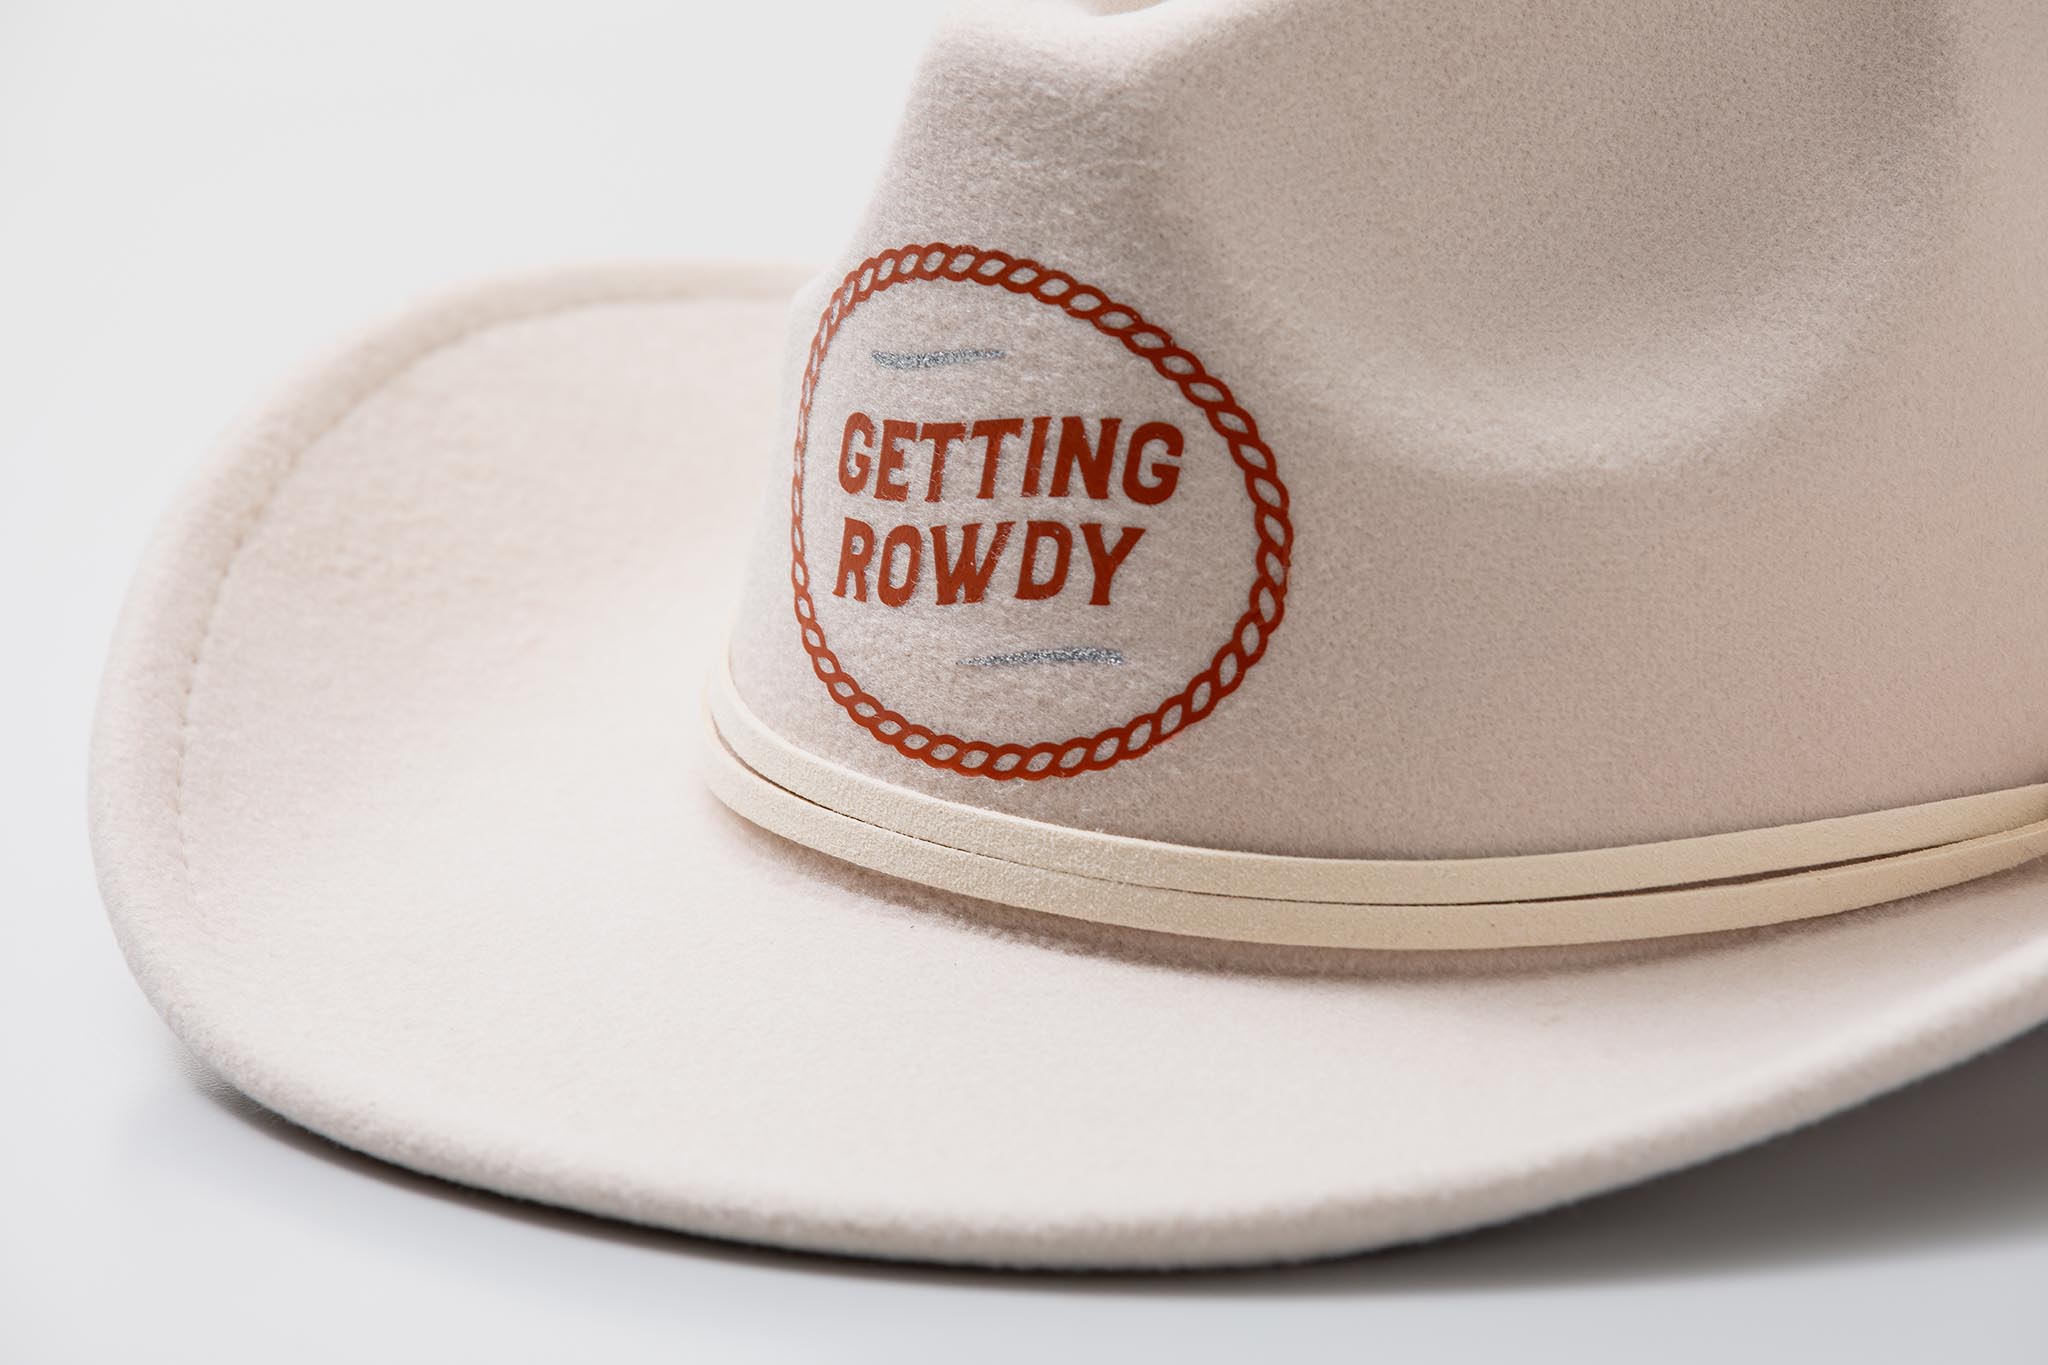 Getting rowdy bachelorette party cowboy hats